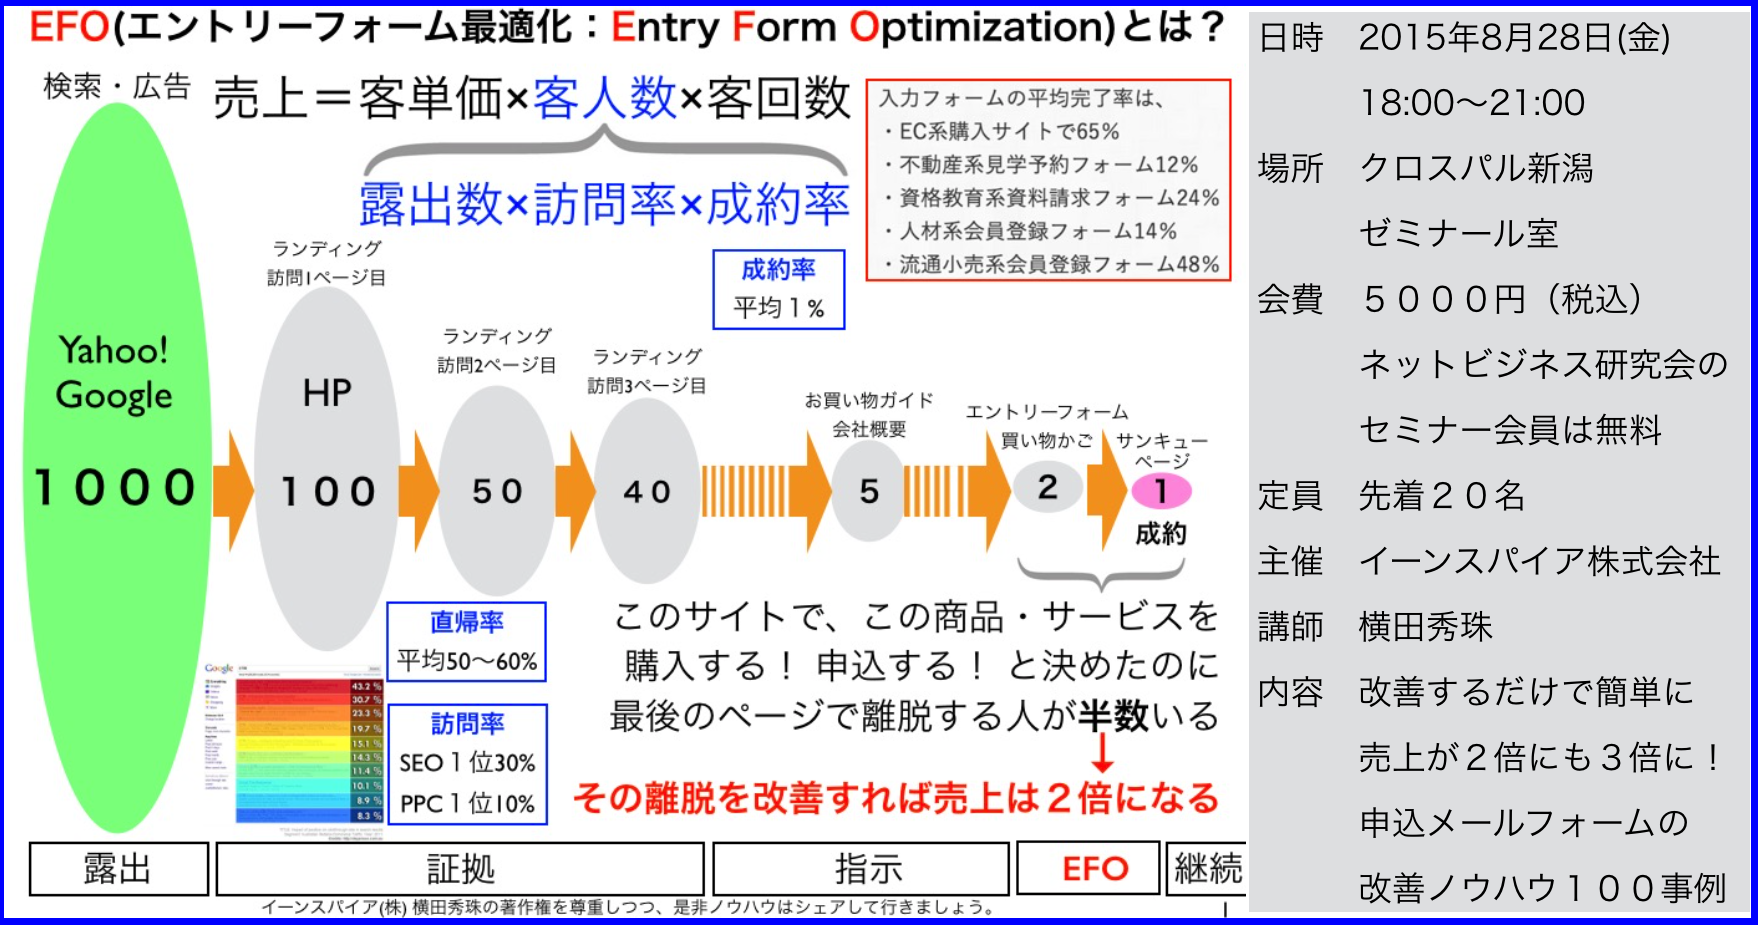 EFO(エントリーフォーム最適化Entry Form Optimization)